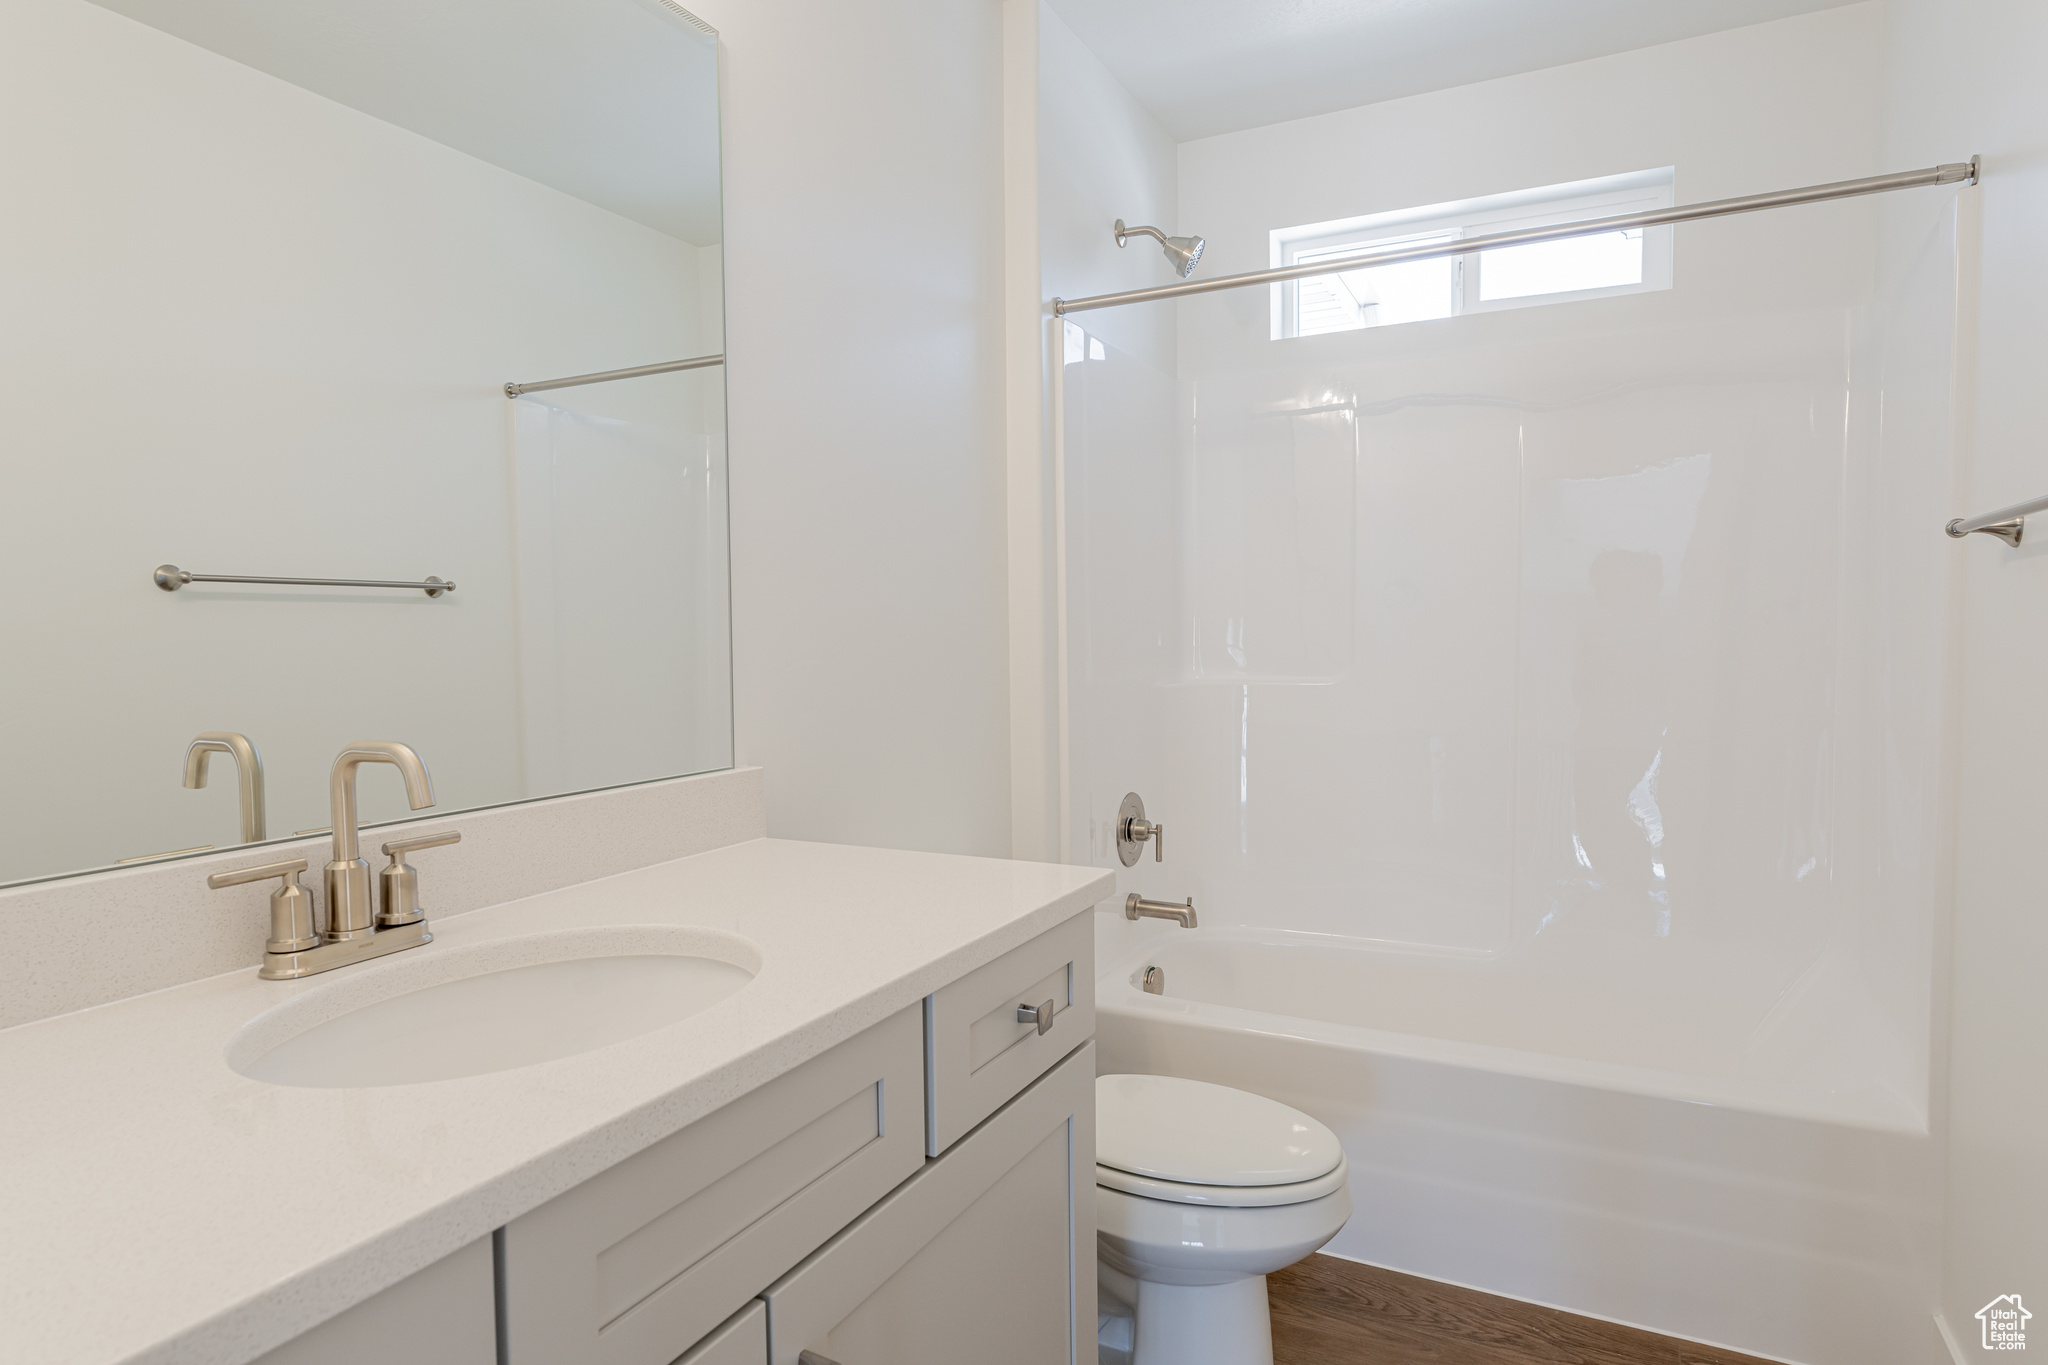 Full bathroom with hardwood / wood-style flooring, toilet, vanity, and washtub / shower combination